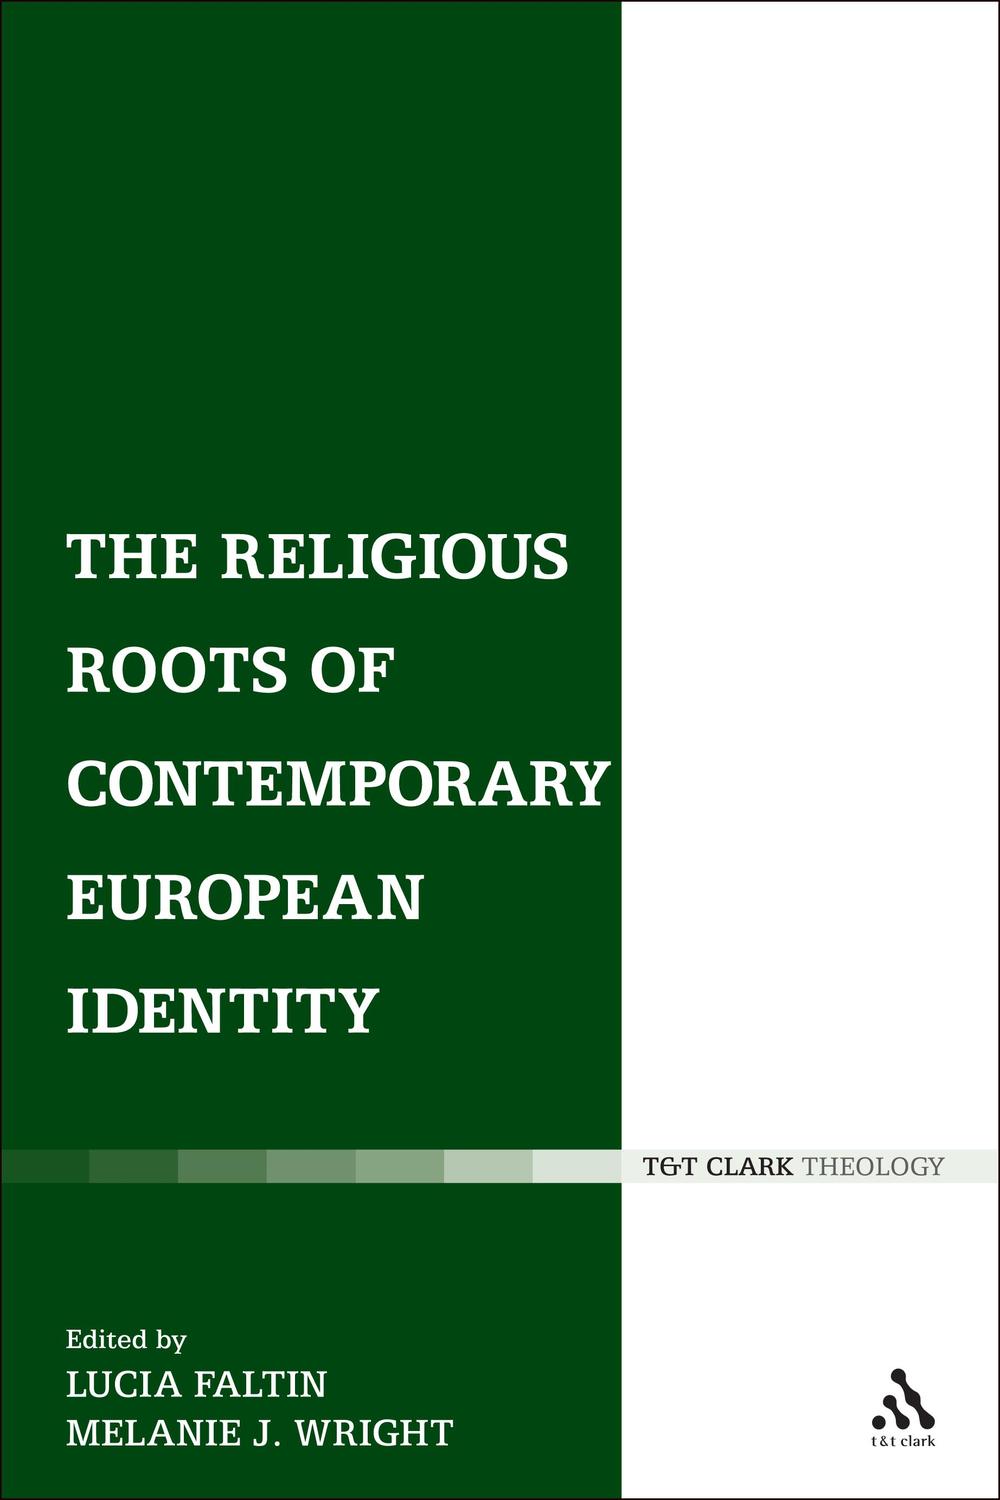 The Religious Roots of Contemporary European Identity - Lucia Faltin, Melanie J. Wright